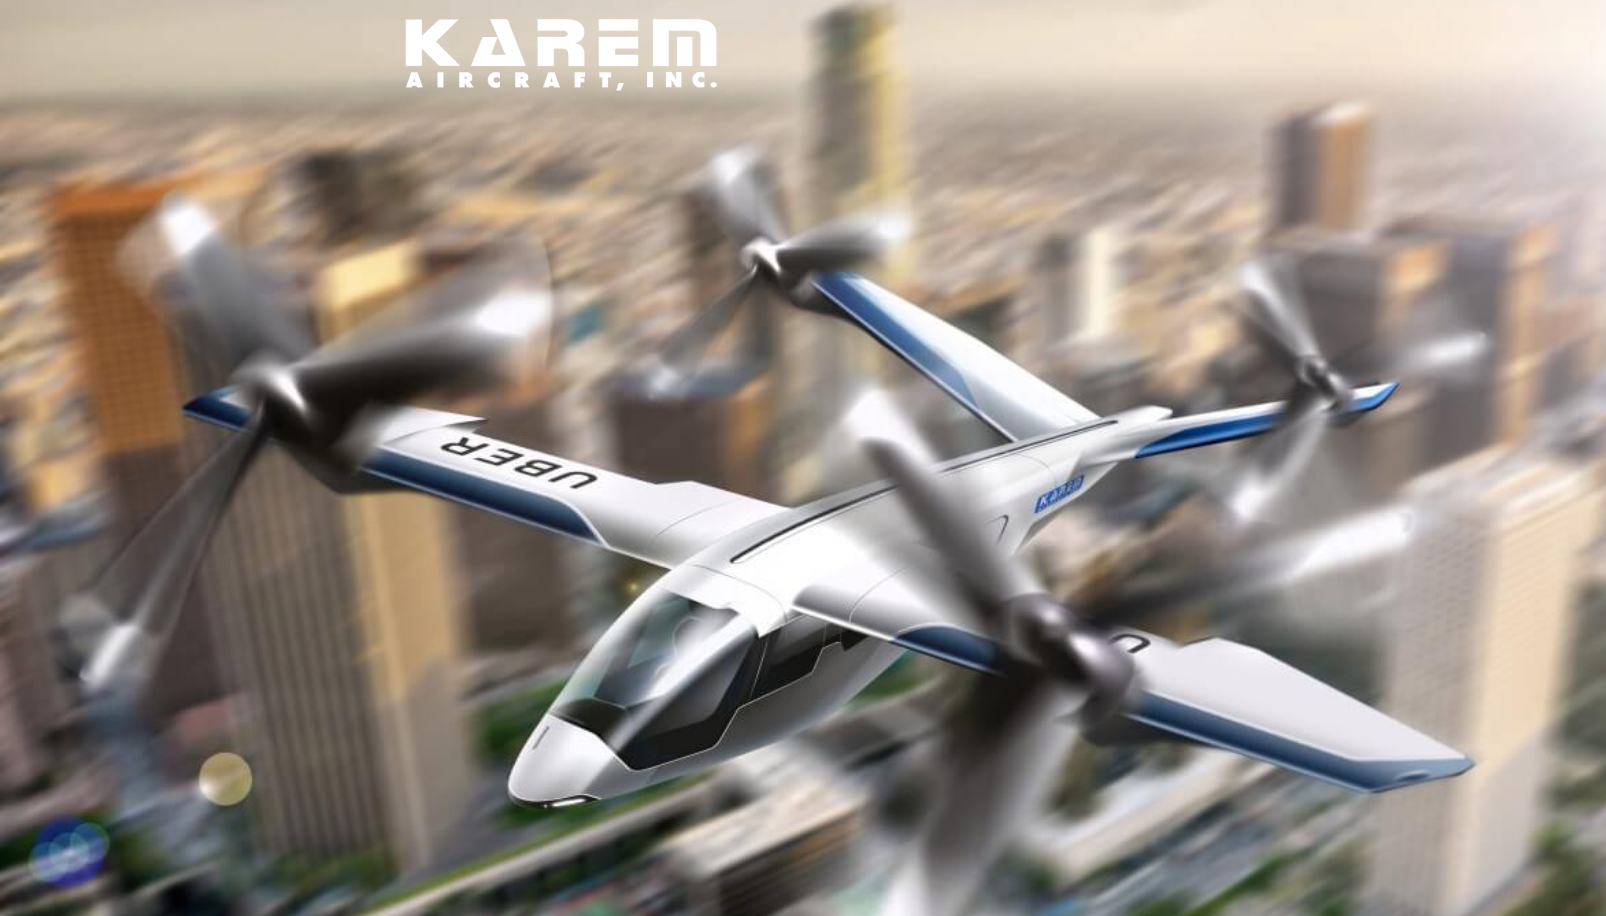 Karem Aircraft载人飞行器